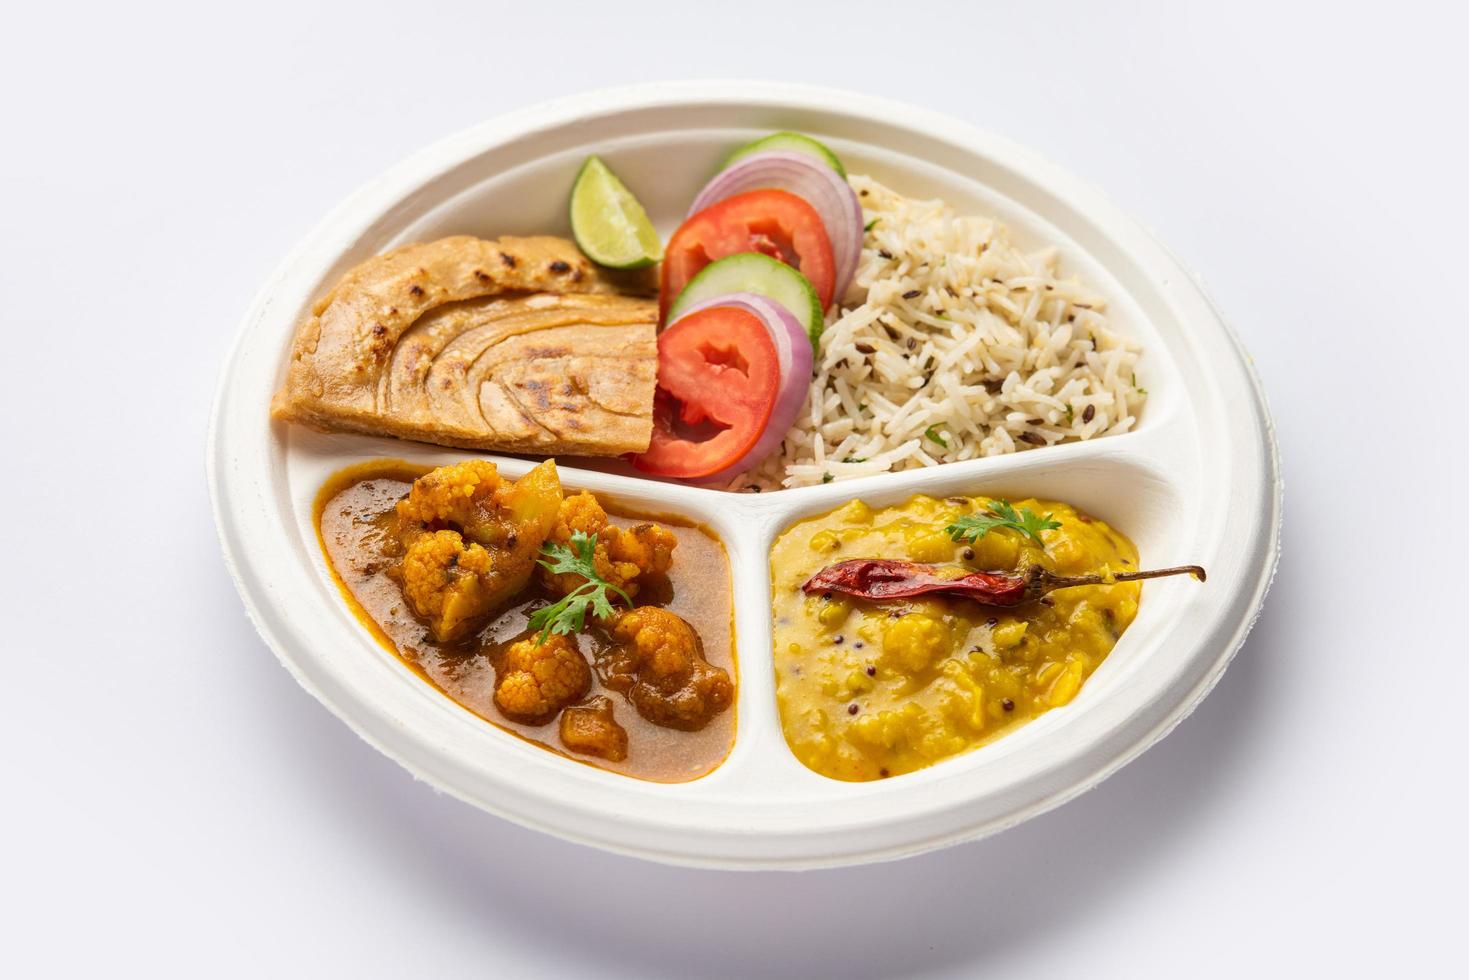 Mini plato de comida india o combo thali con gobi masala, roti, dal tarka, arroz jeera, ensalada foto